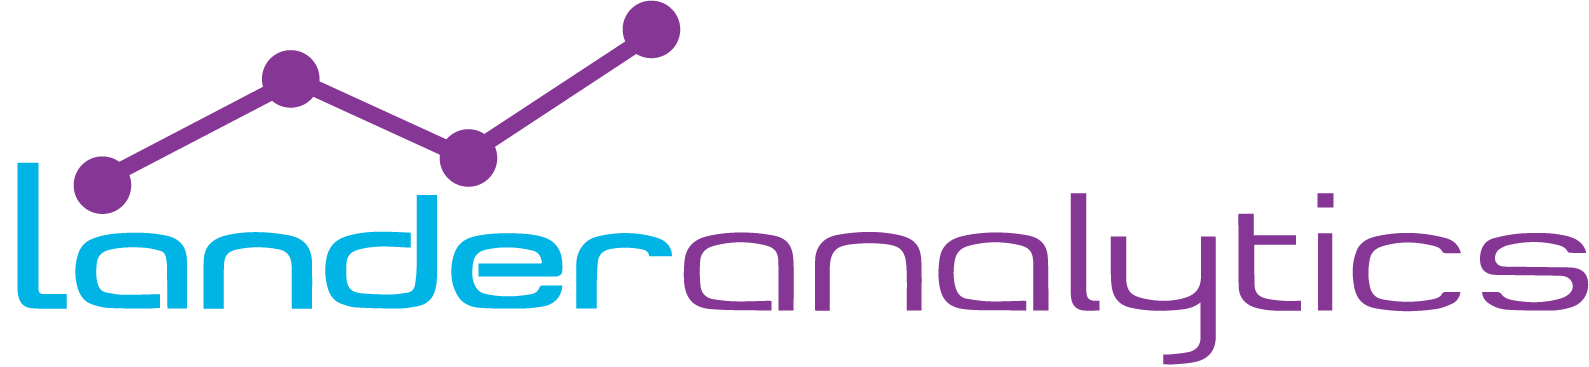 Lander Analytics logo